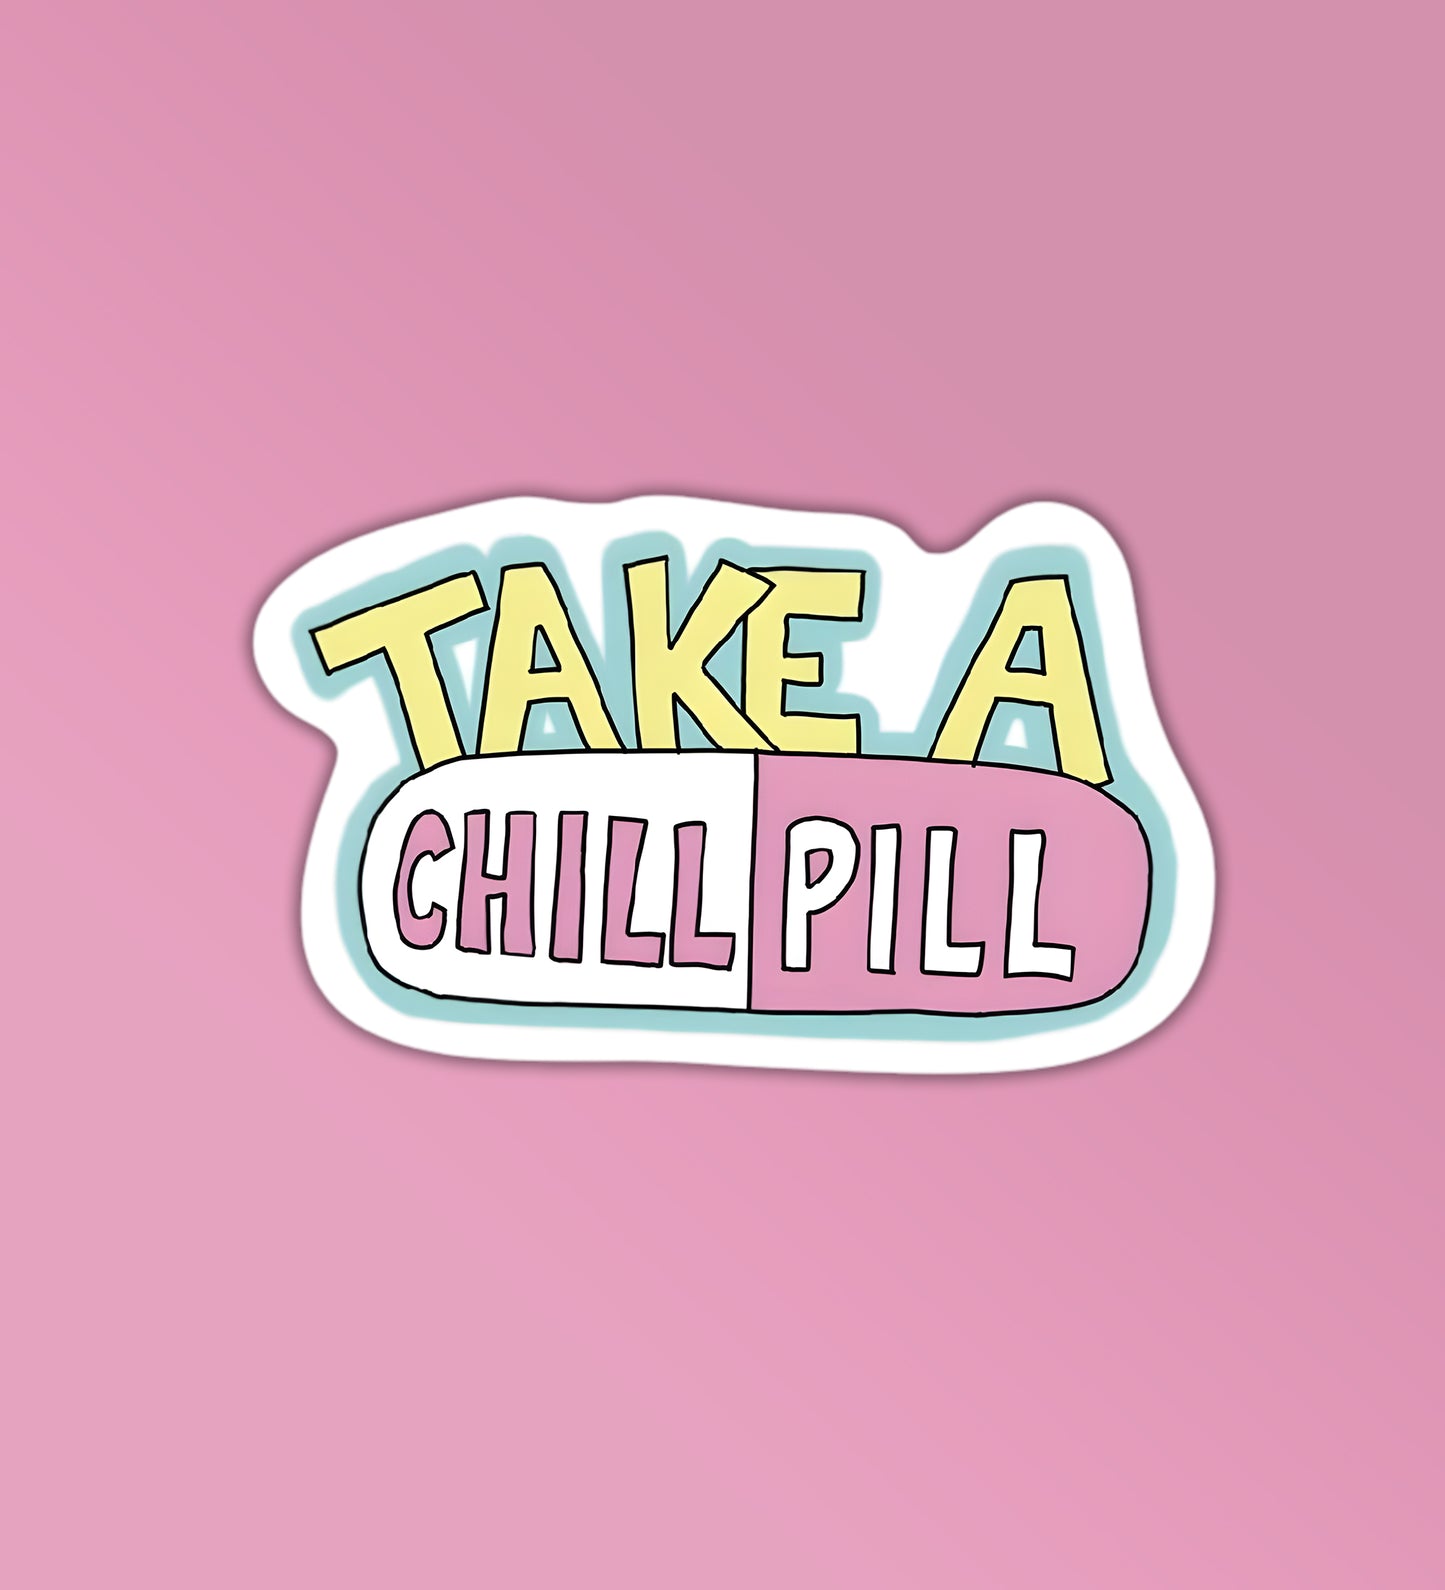 Take A Chill Pill Sticker